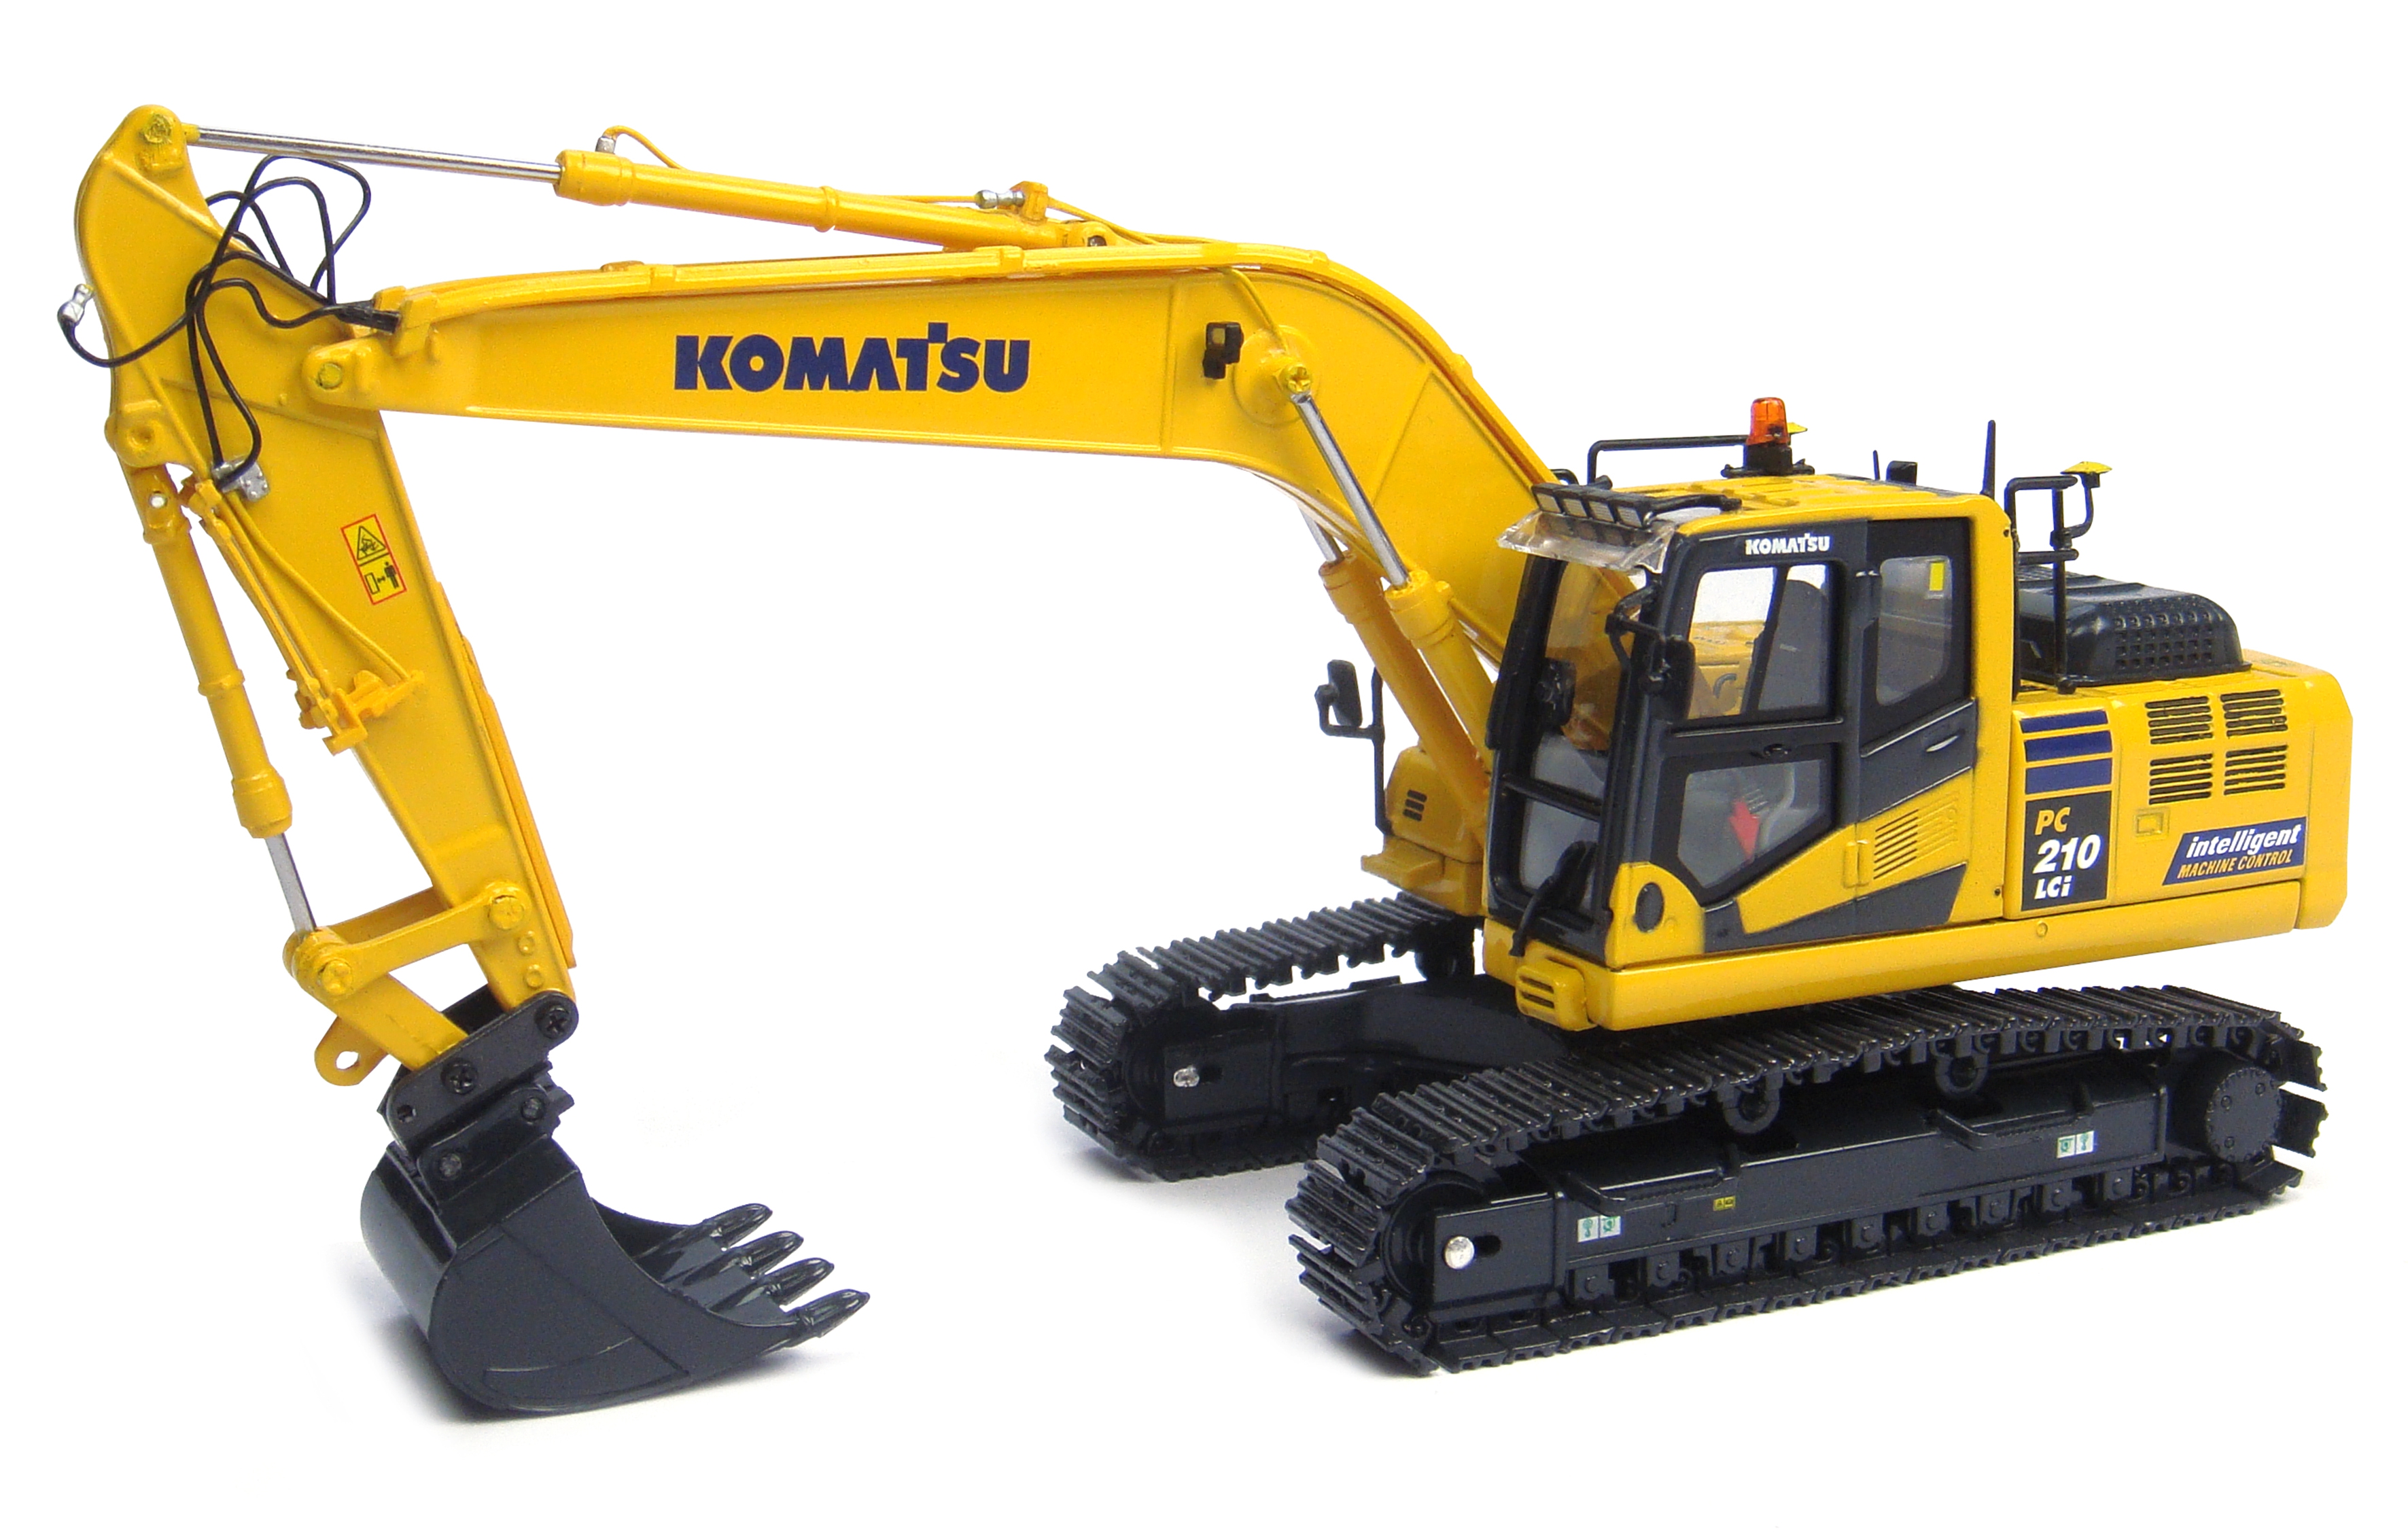 Komatsu Pc210lci-10 Tracked Excavator "intelligent Machine Control" Imc Edition 1/50 Diecast Model By Universal Hobbies